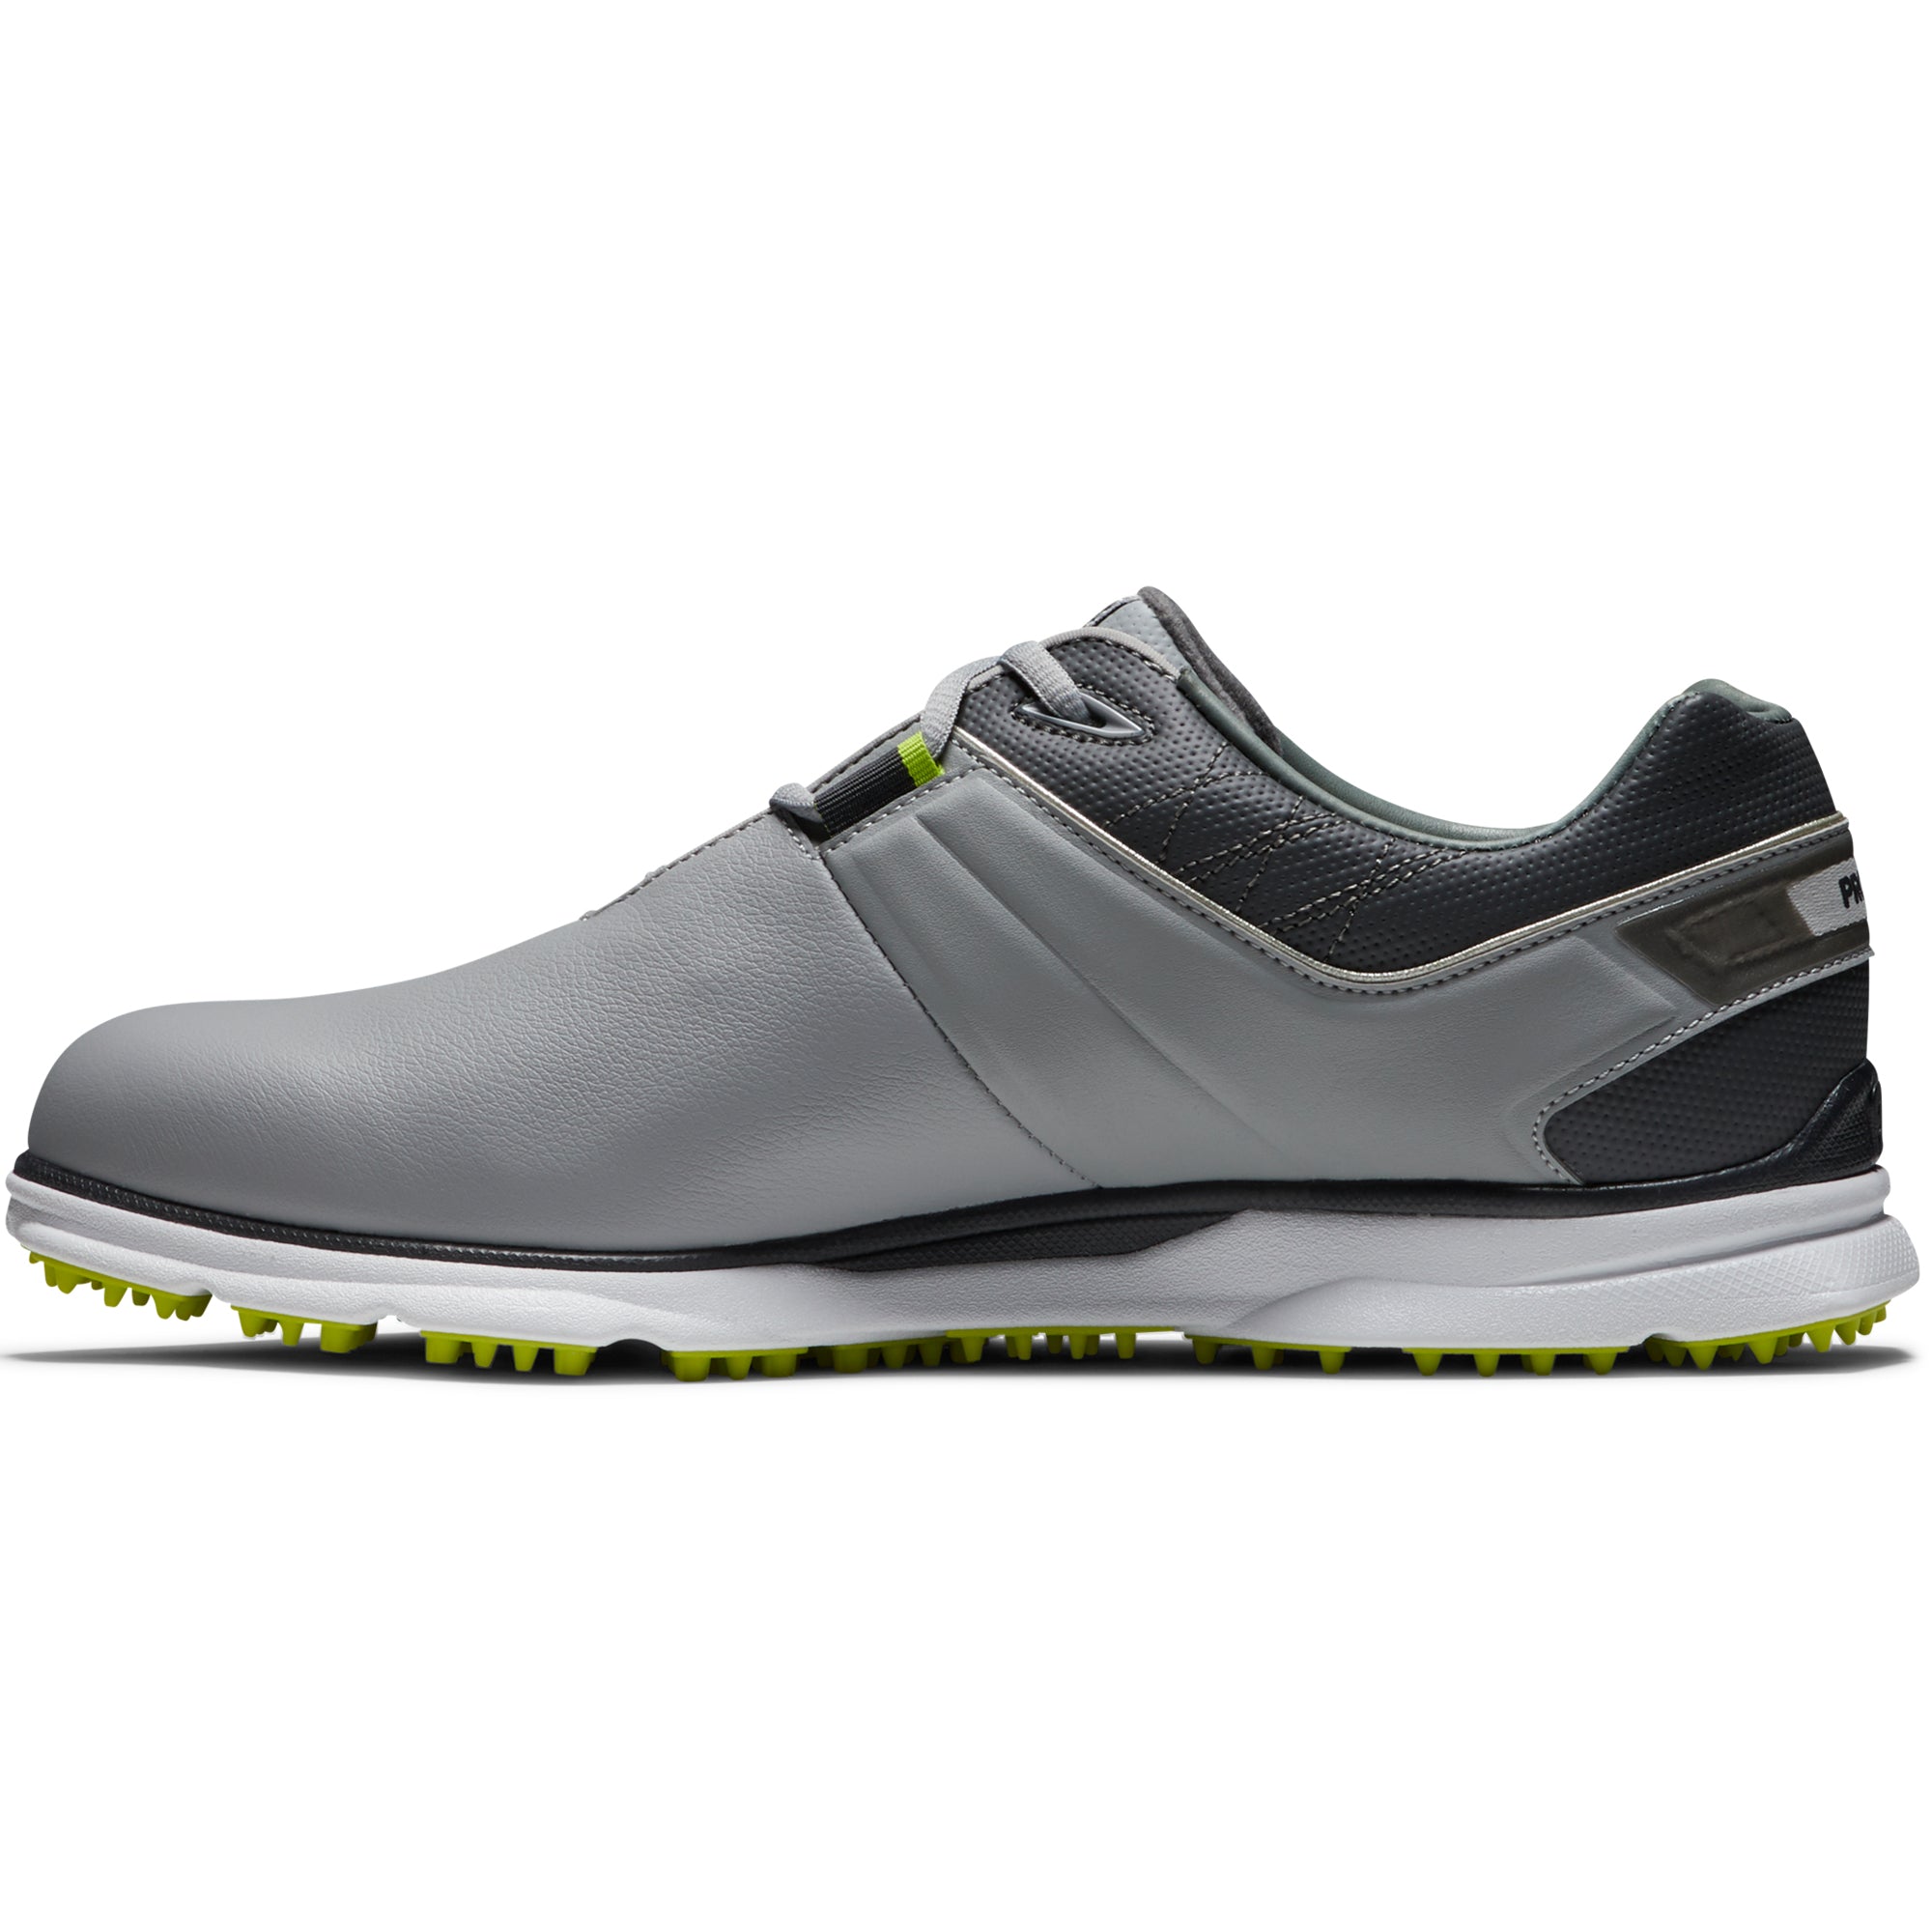 footjoy-pro-sl-golf-shoes-53075-grey-charcoal